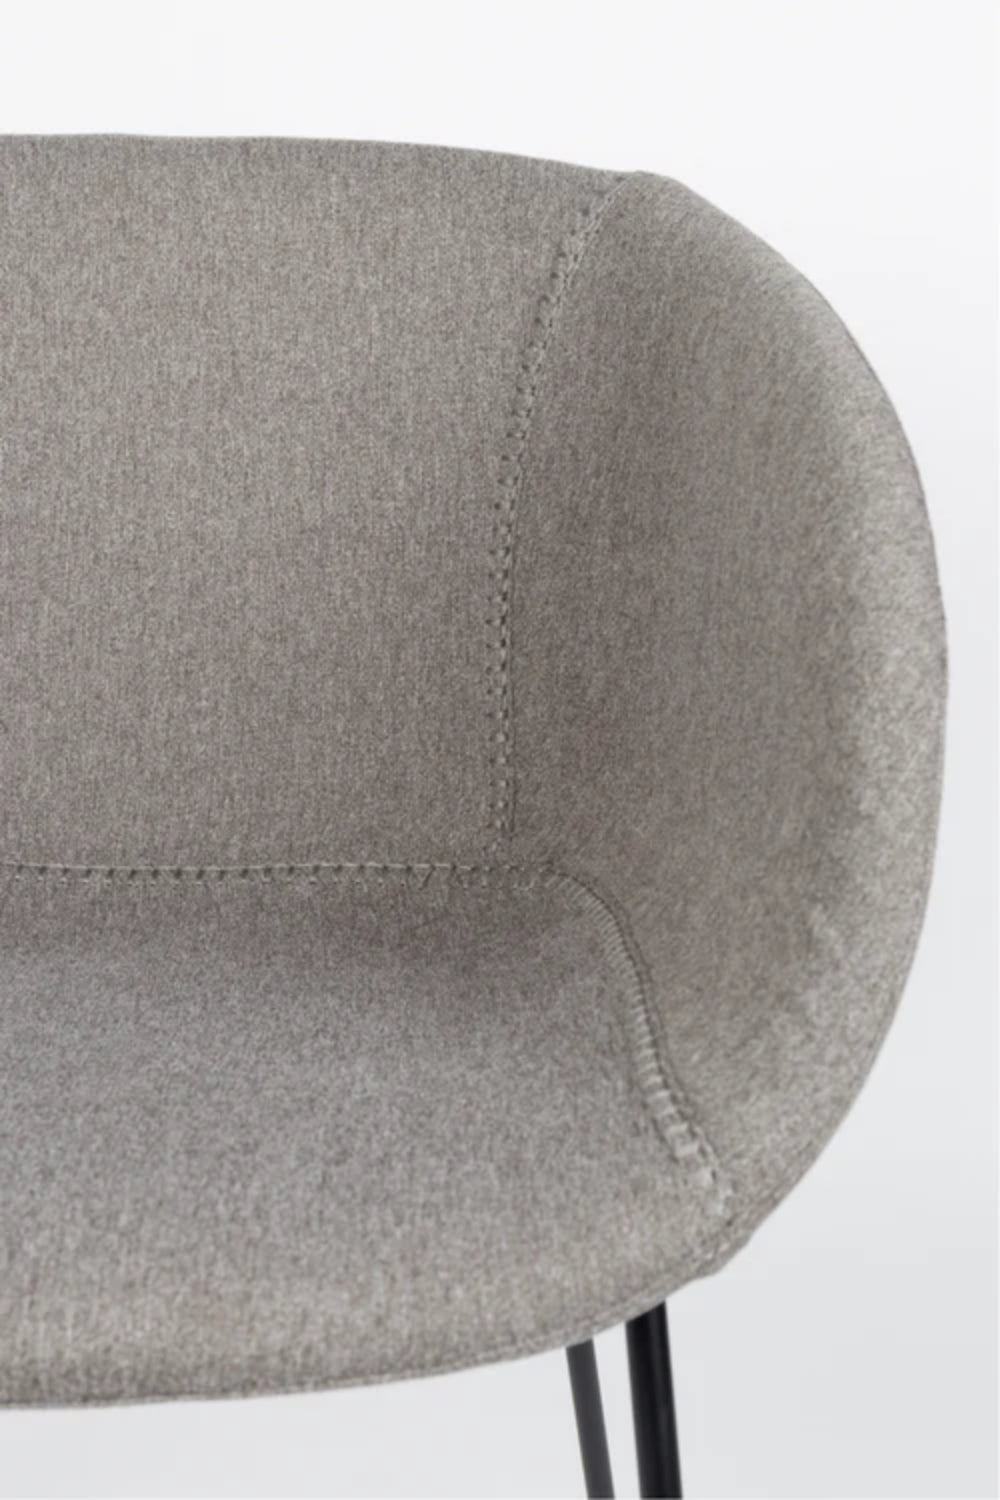 Fallon Dining Chair Fab Grey Armrest Detail